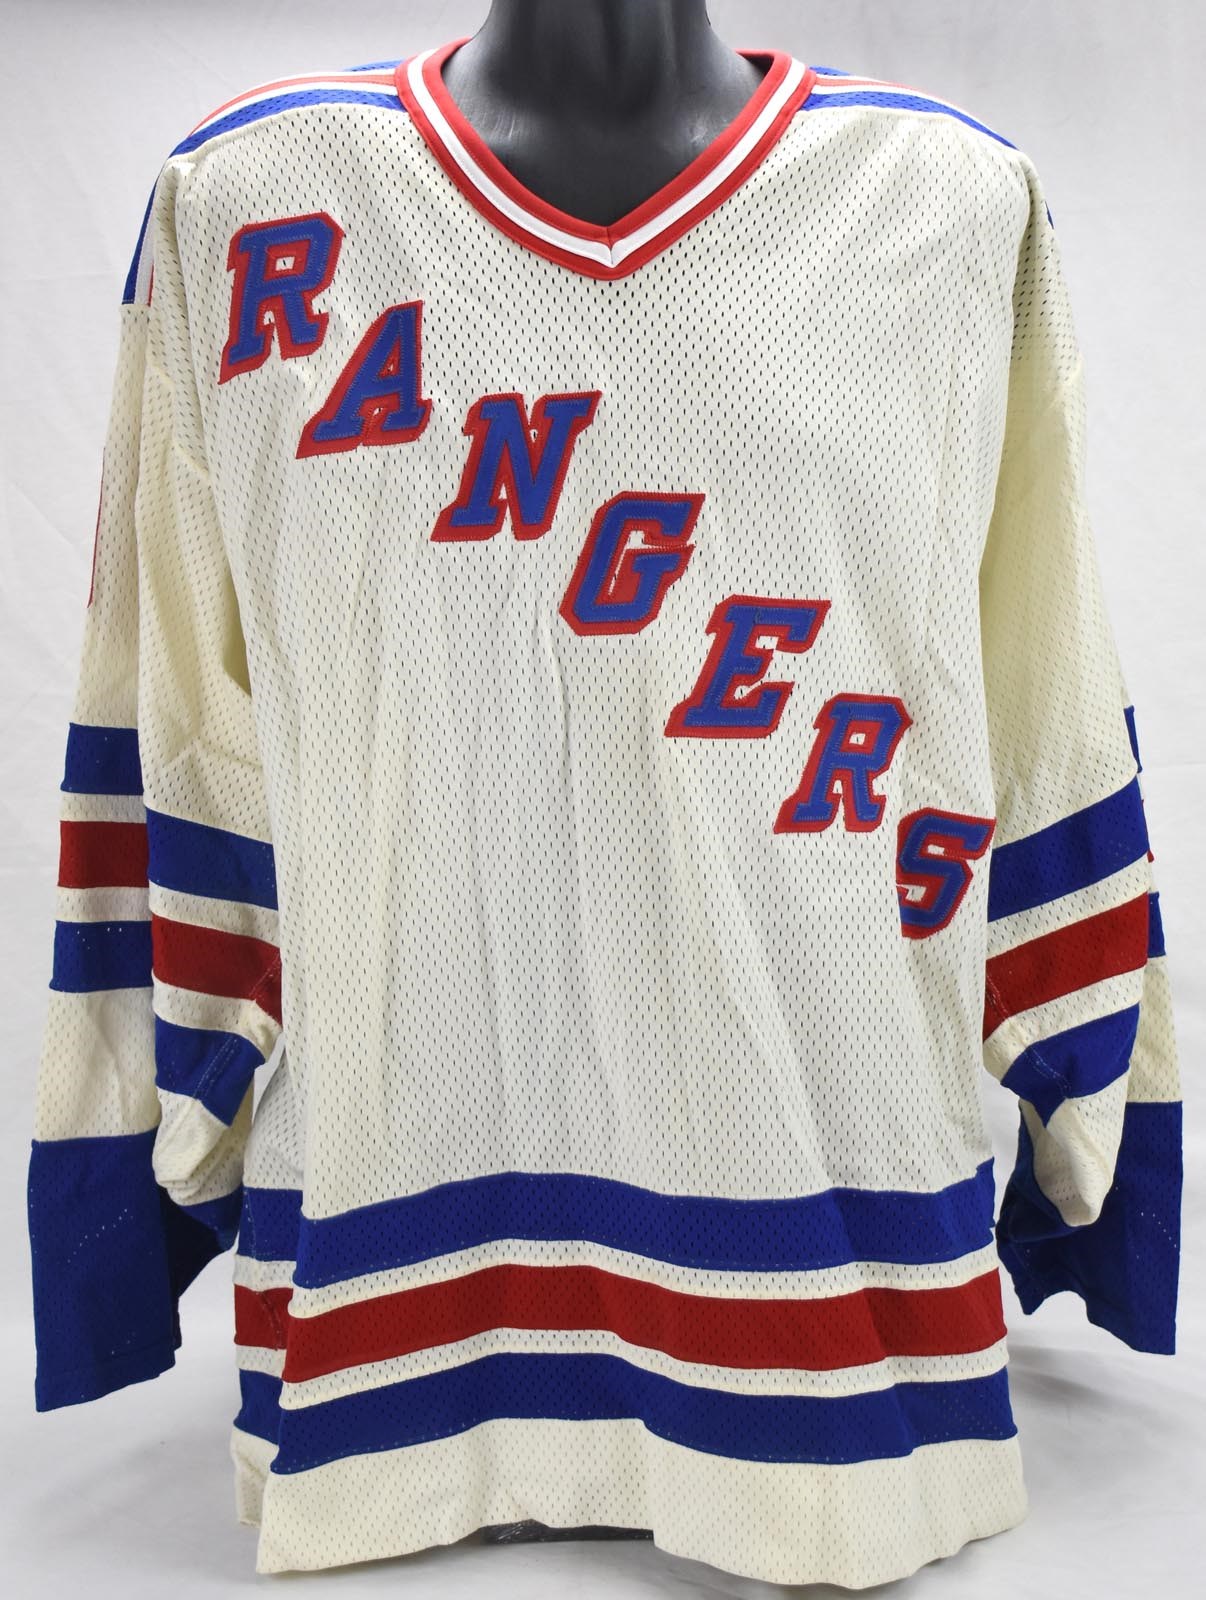 Hockey - Circa 1990-91 Bernie Nicholls Game Issued #9 Rangers Jersey - Retired Number